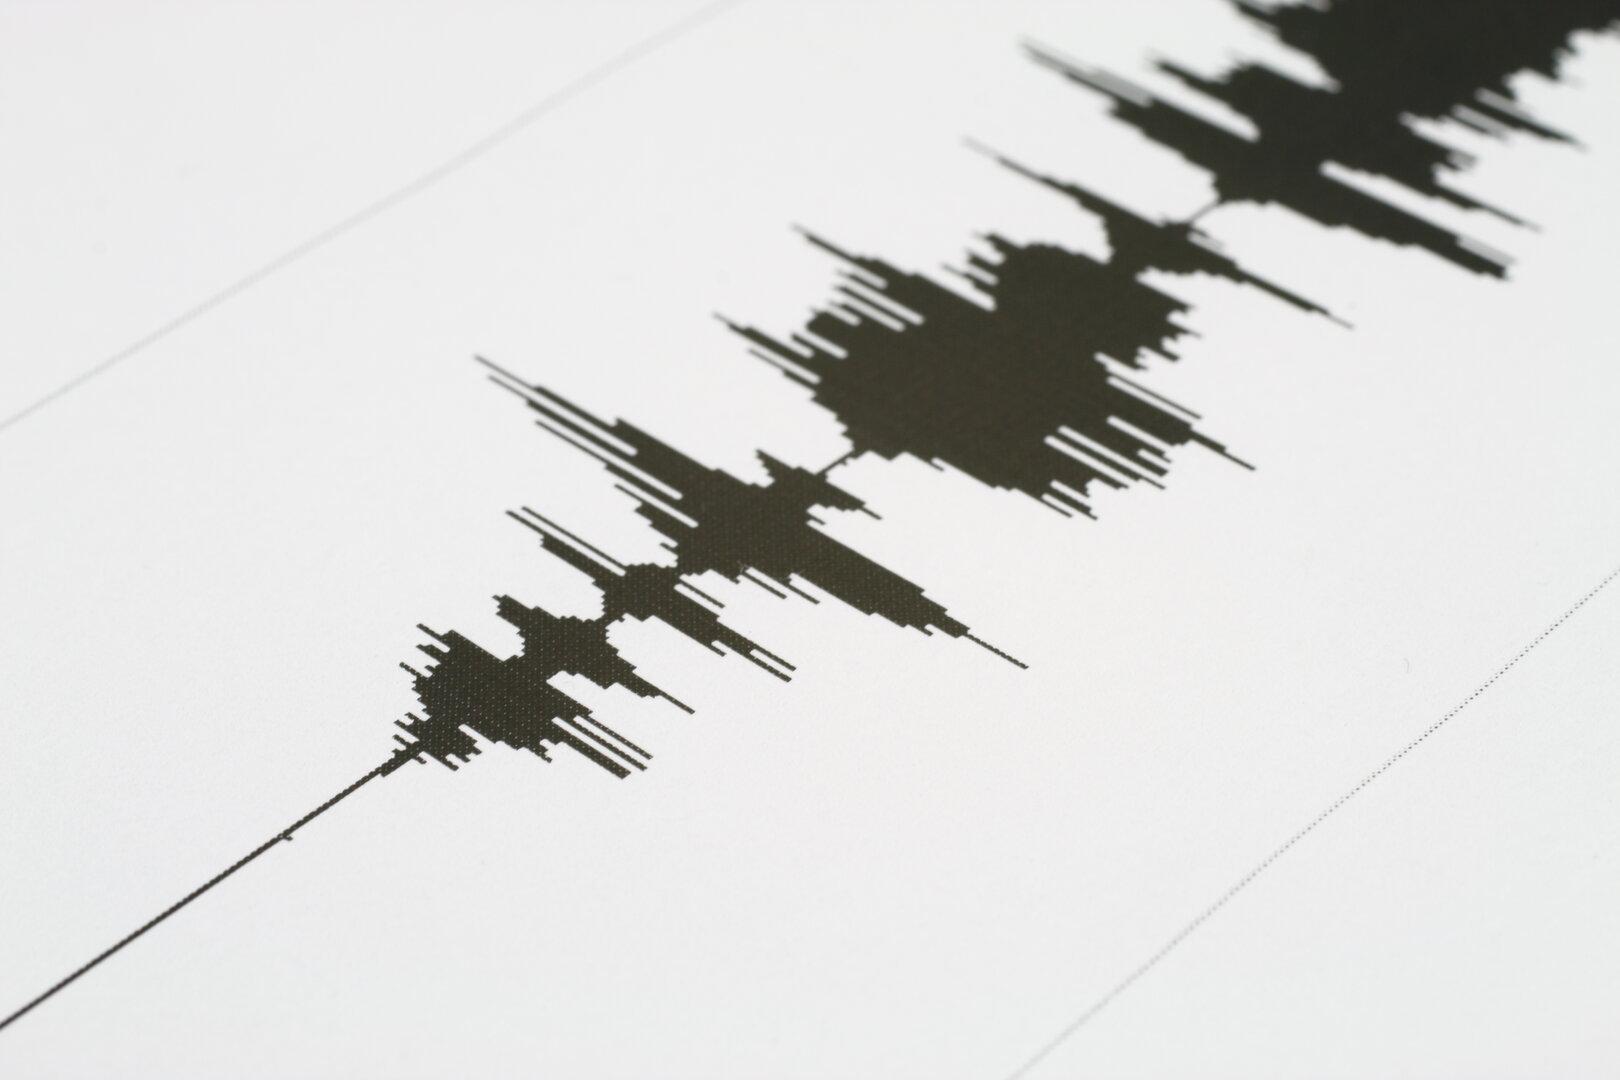 Erdbeben erschüttert Bosnien und Montenegro